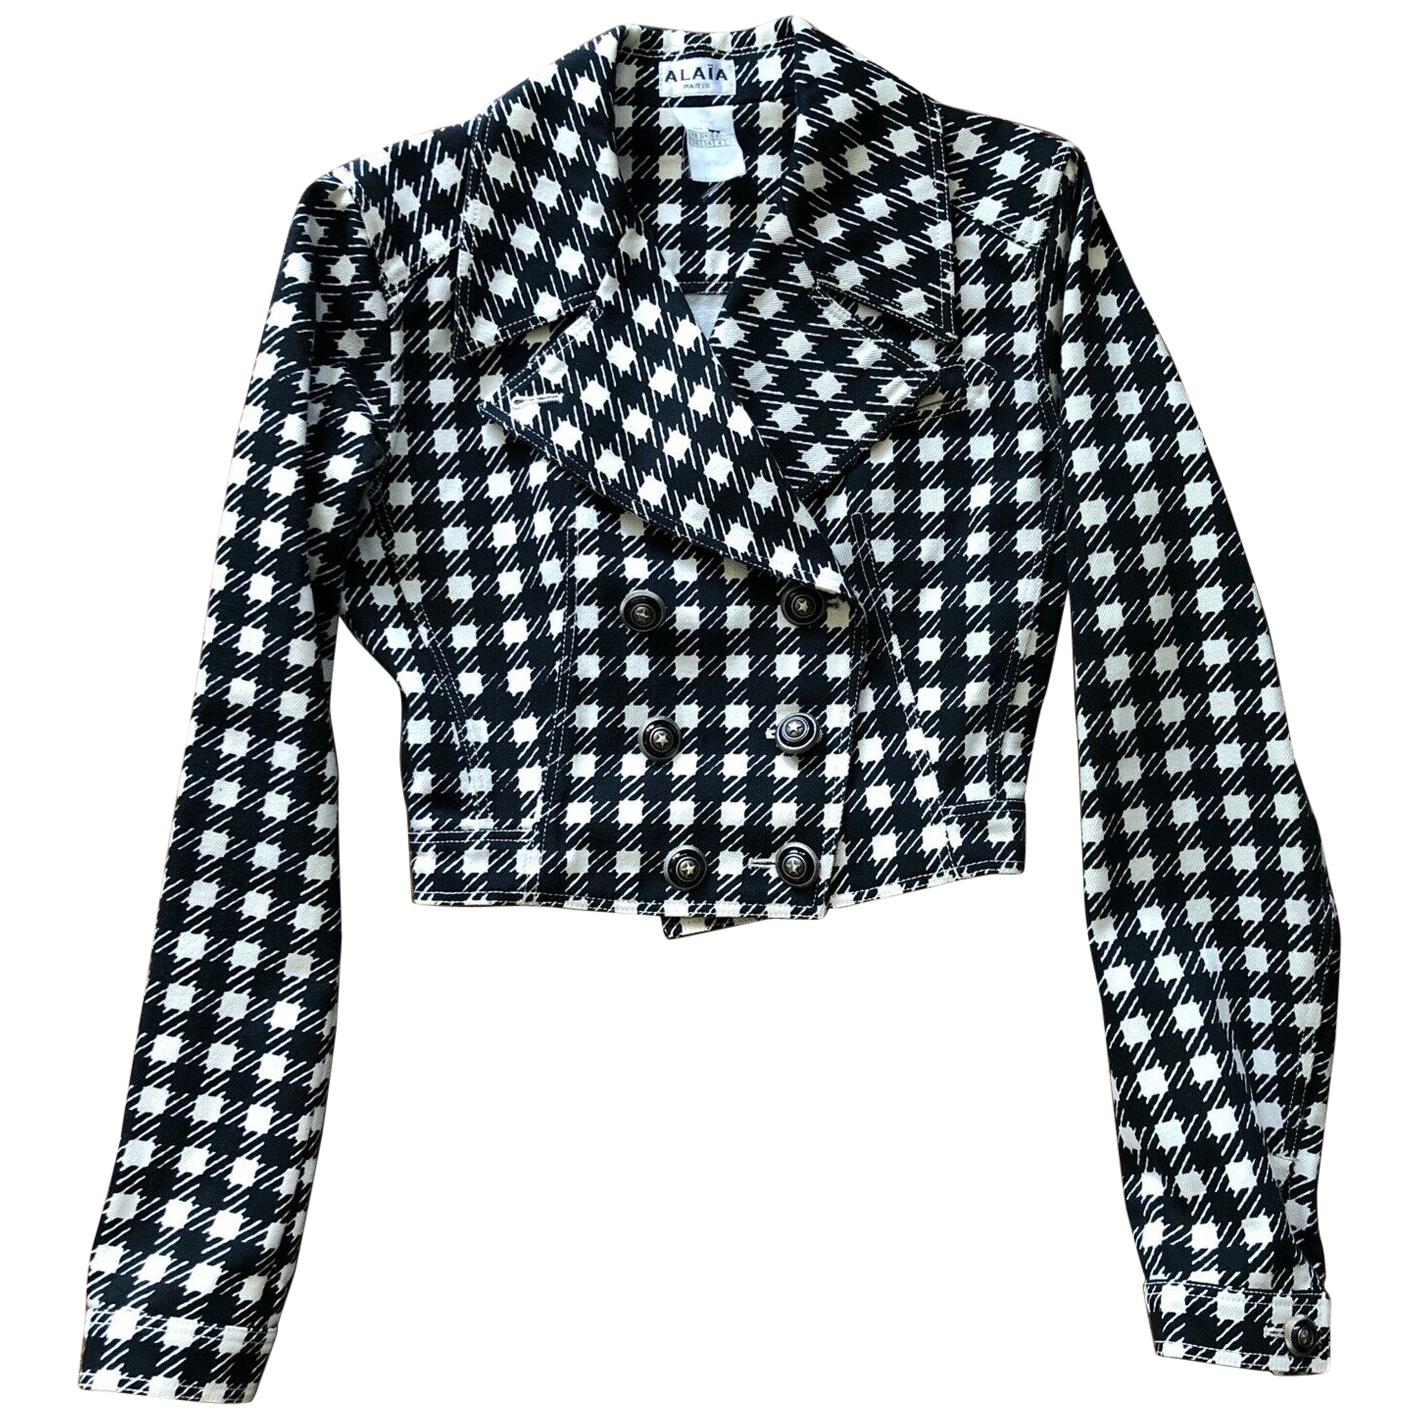 Azzedine Alaia S/S 1991 Iconic Tati Checkered Black and White Crop Jacket